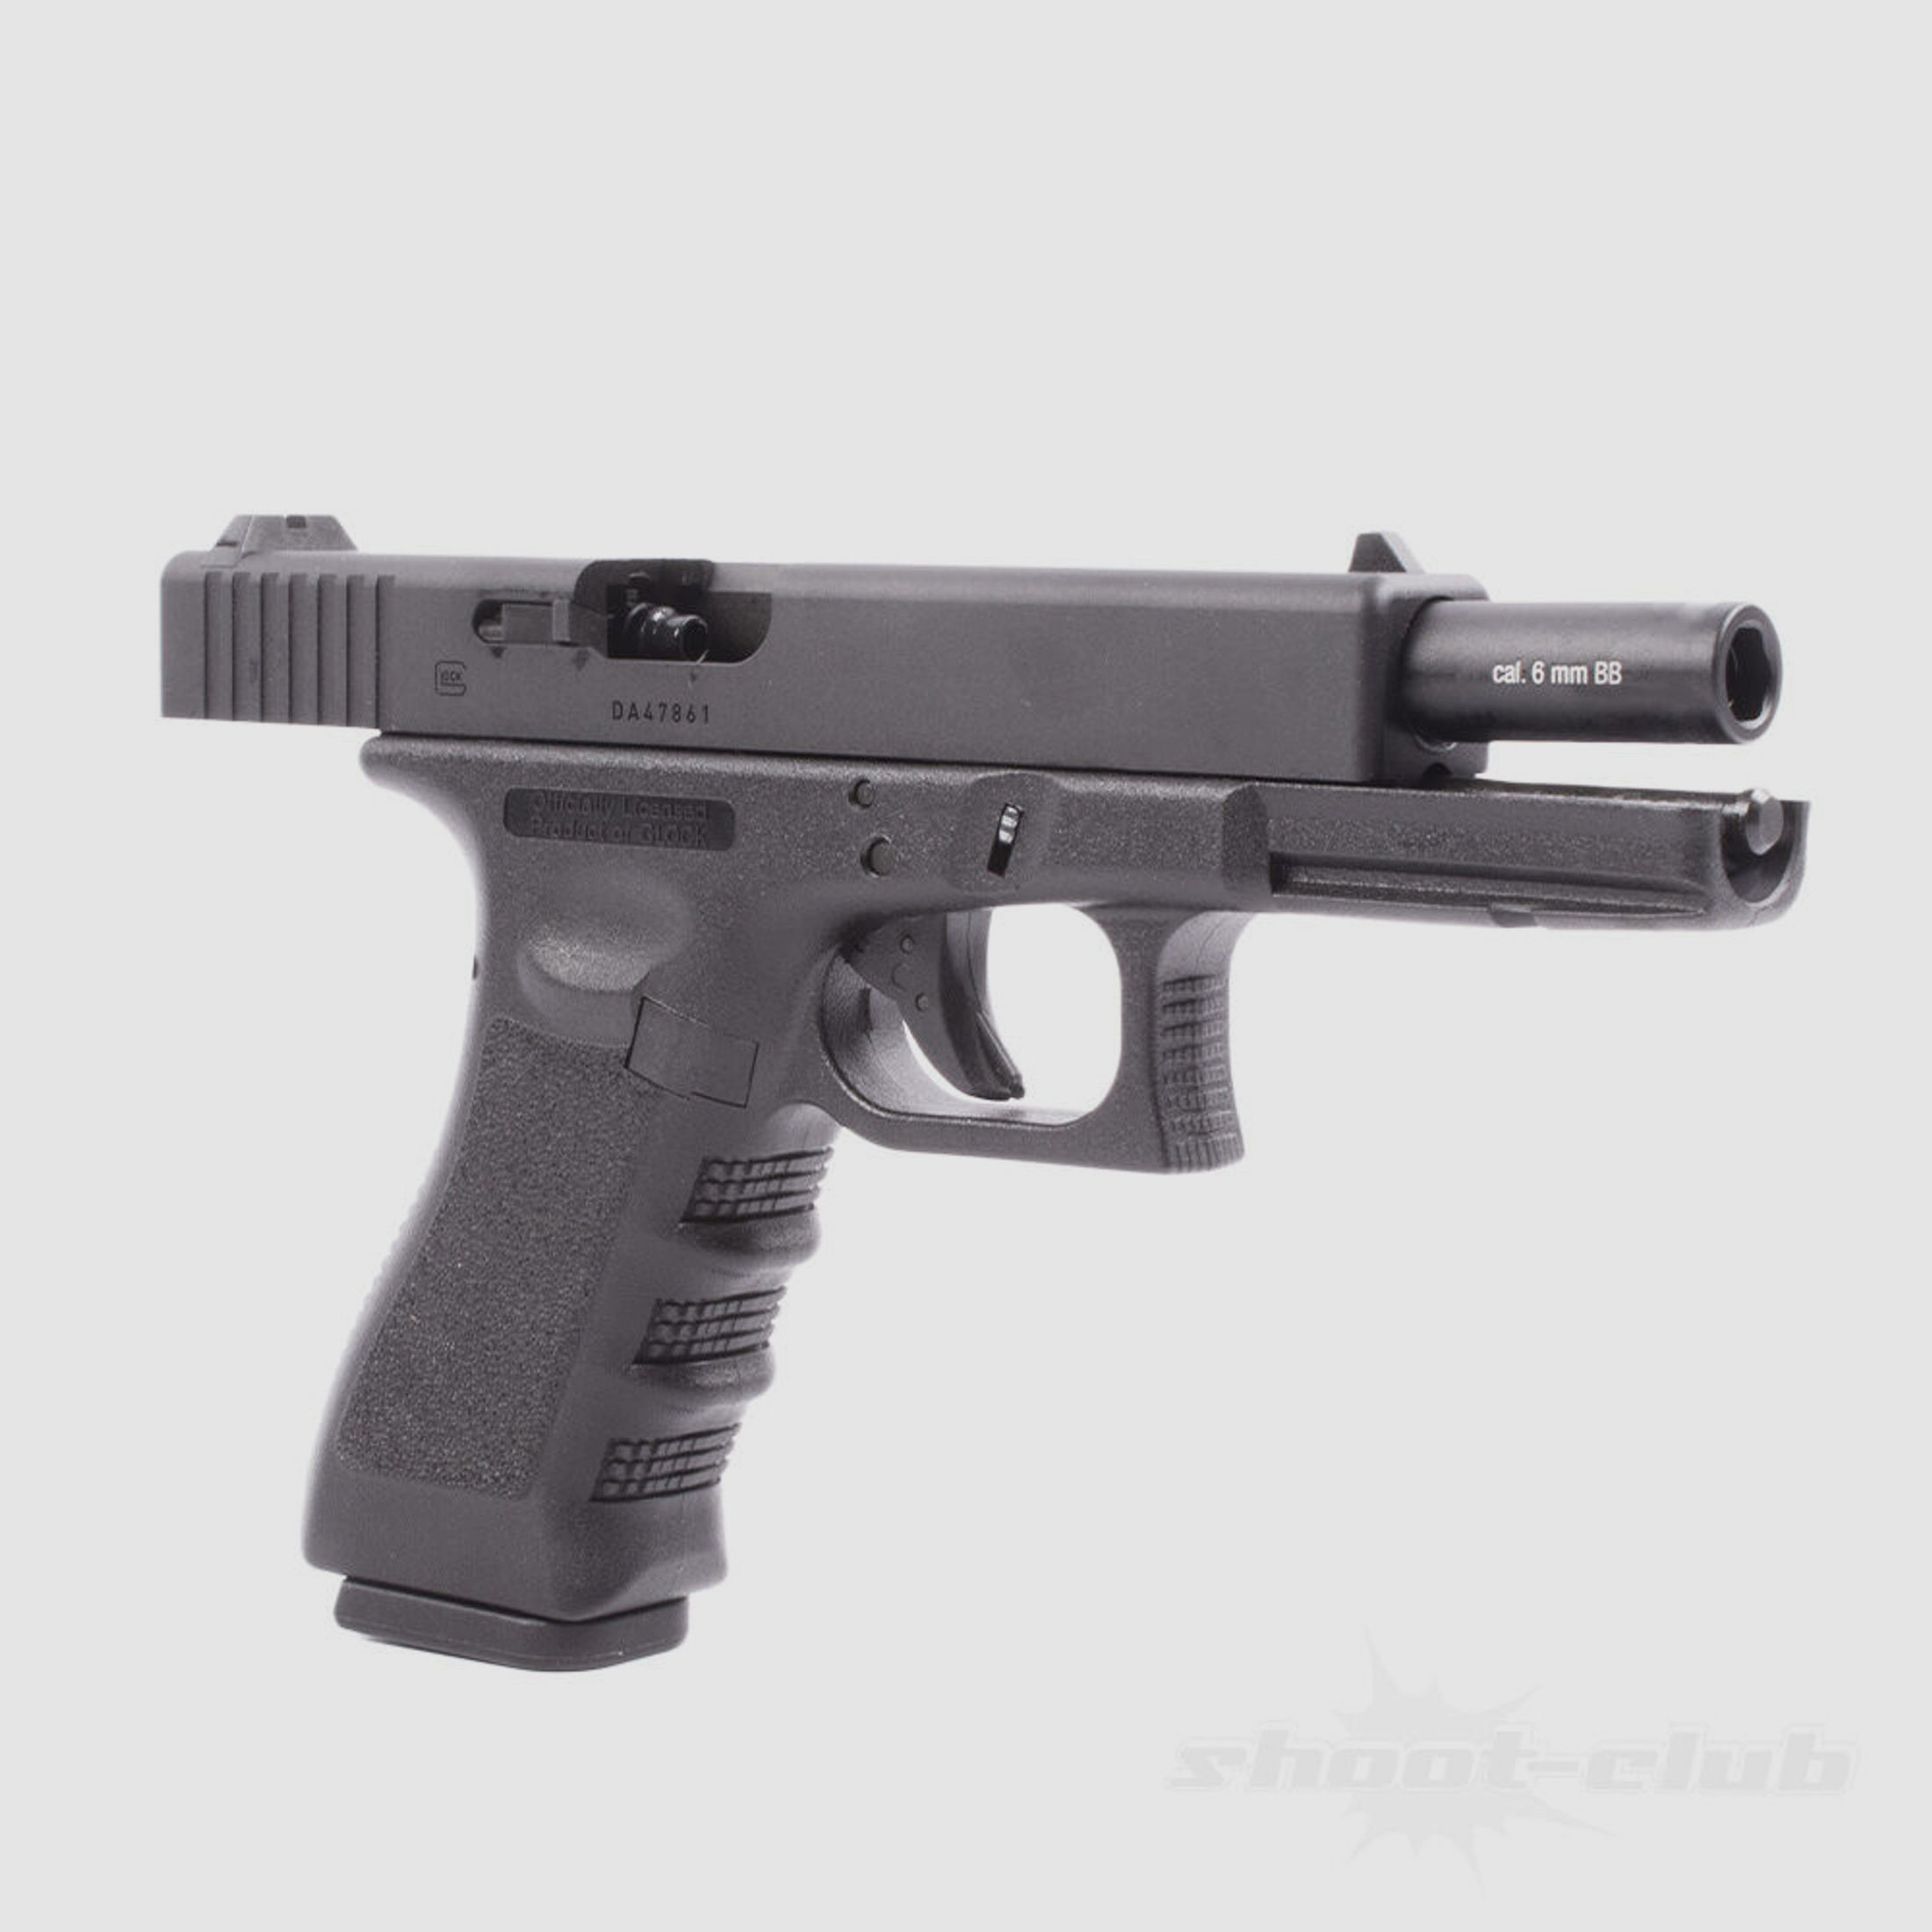 Glock 17 Airsoftpistole GBB Metallschlitten 6 mm BB 20 Schuss